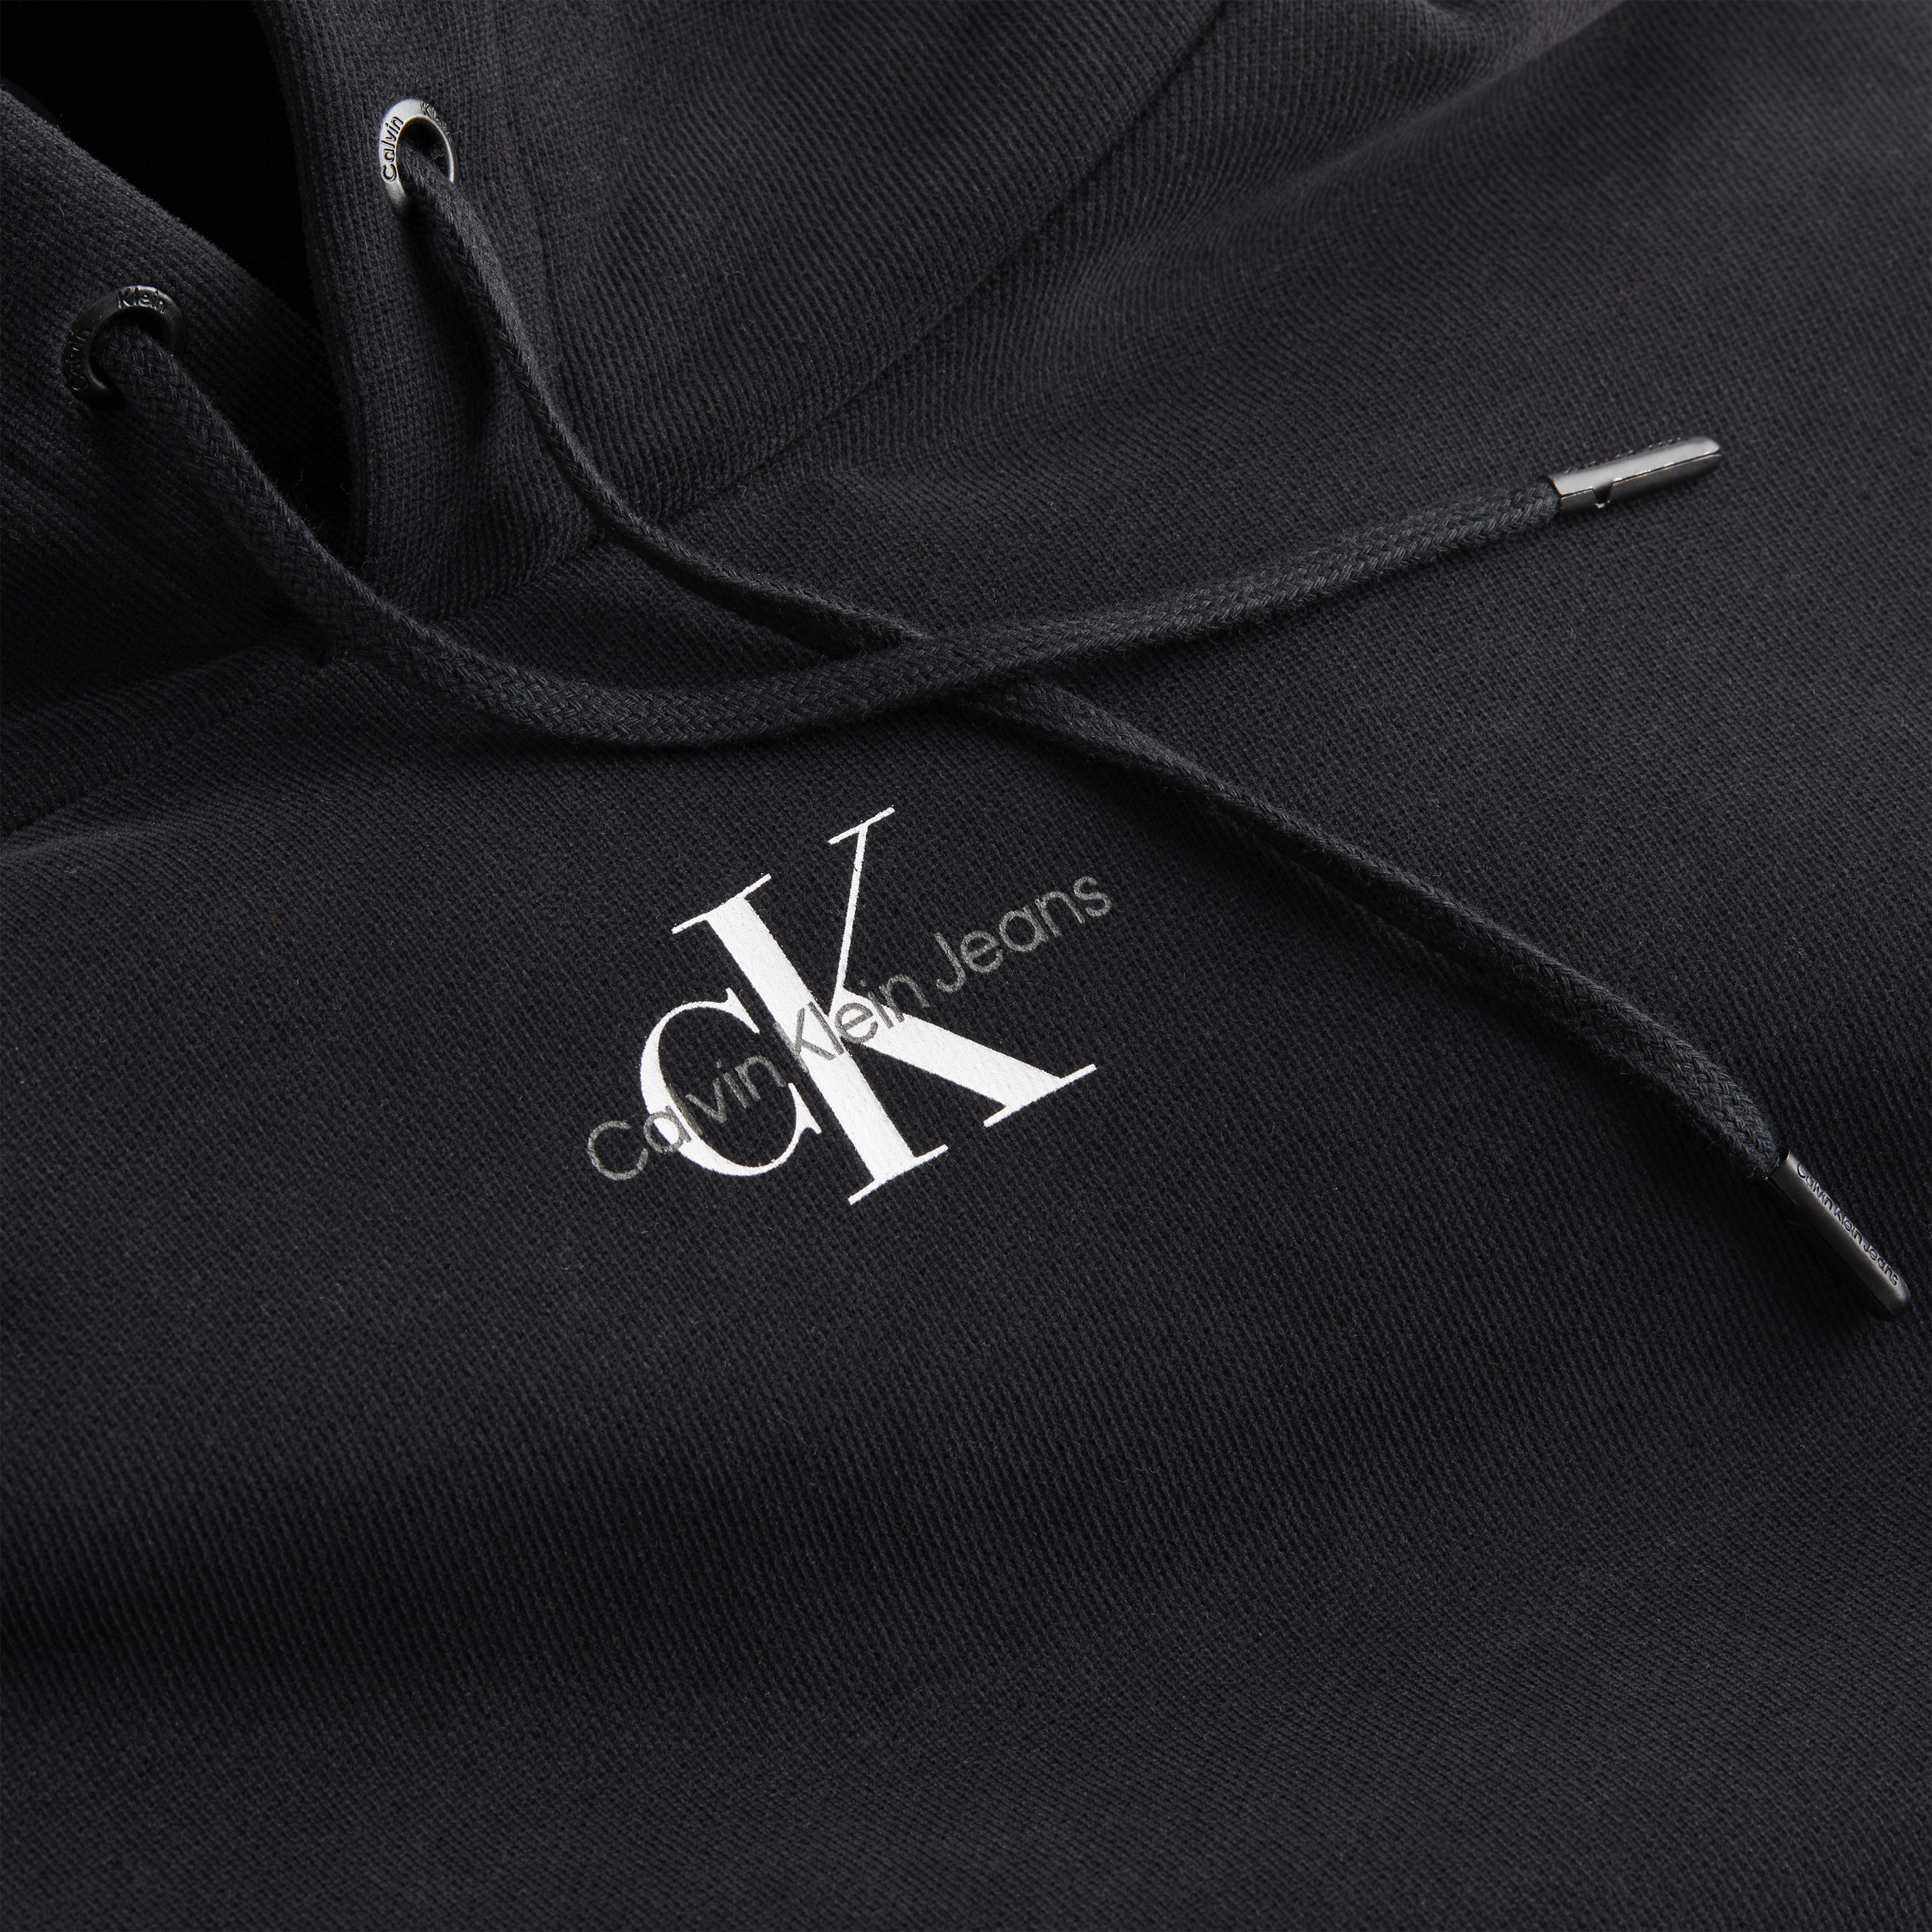 Calvin Klein Jeans - Cotton sweatshirt with logo, Black, large image number 2